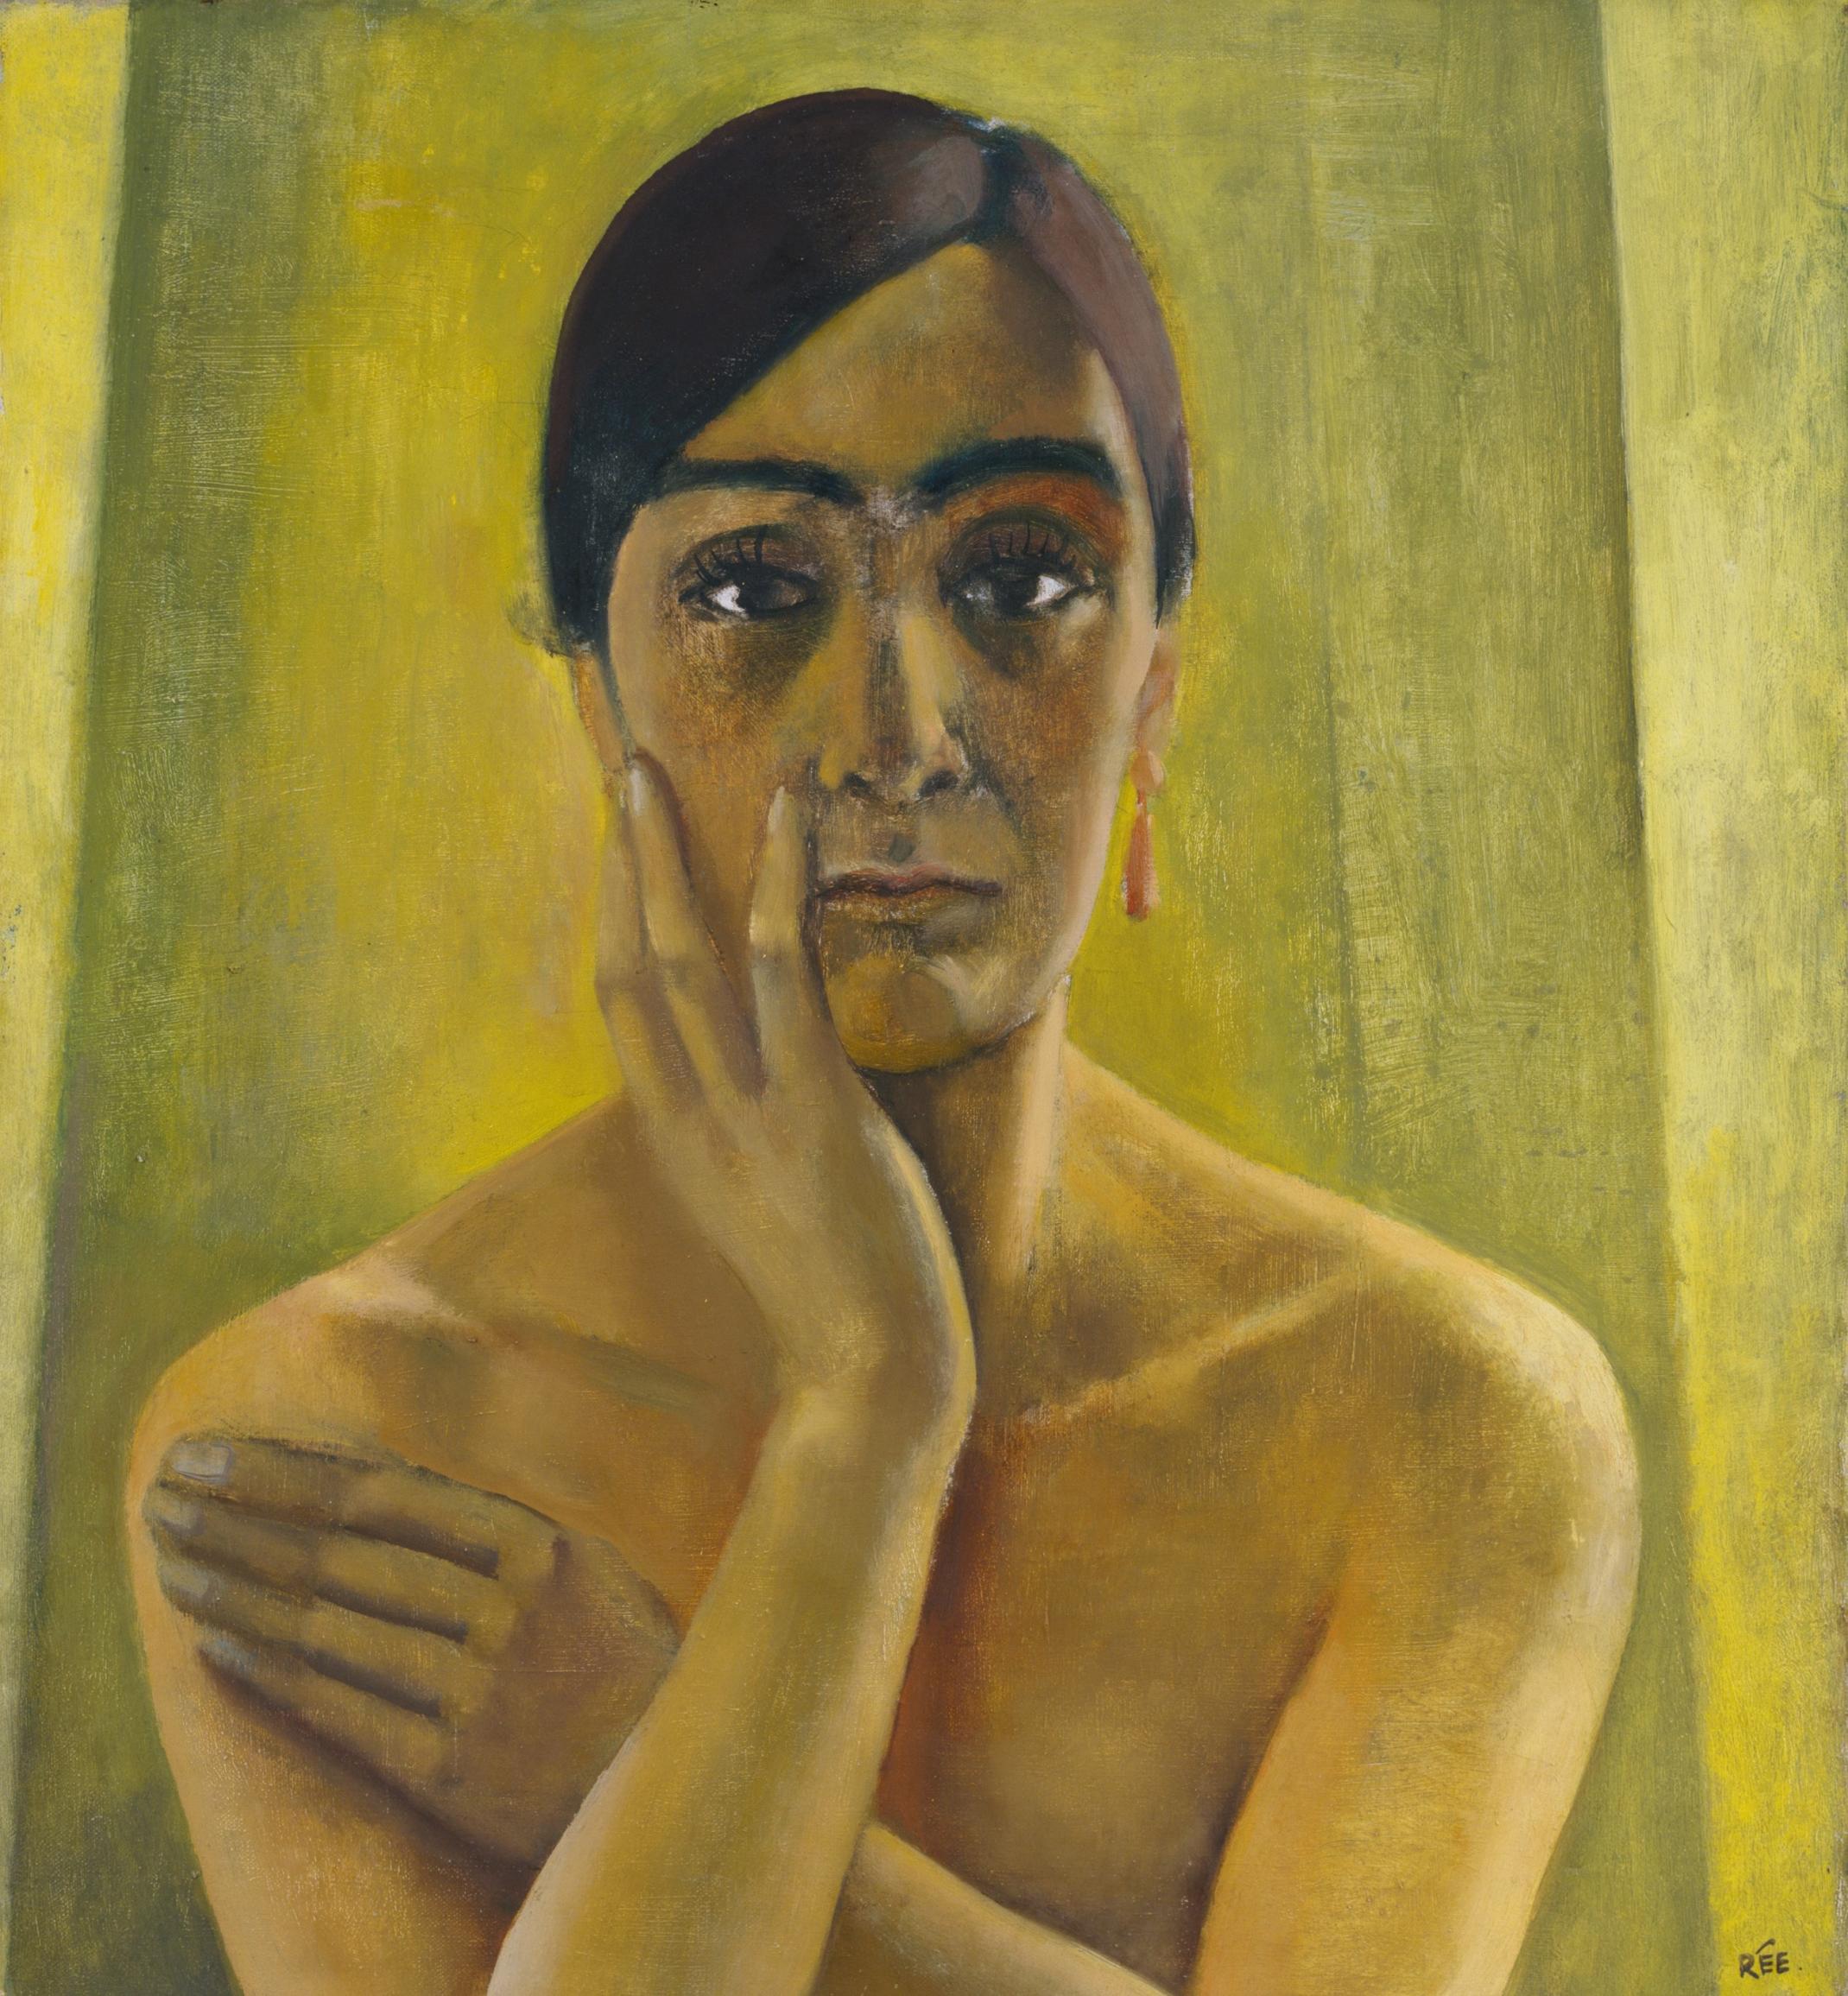 Autorretrato by Anita Rée - 1930 - 66 x 60,8 cm Hamburger Kunsthalle